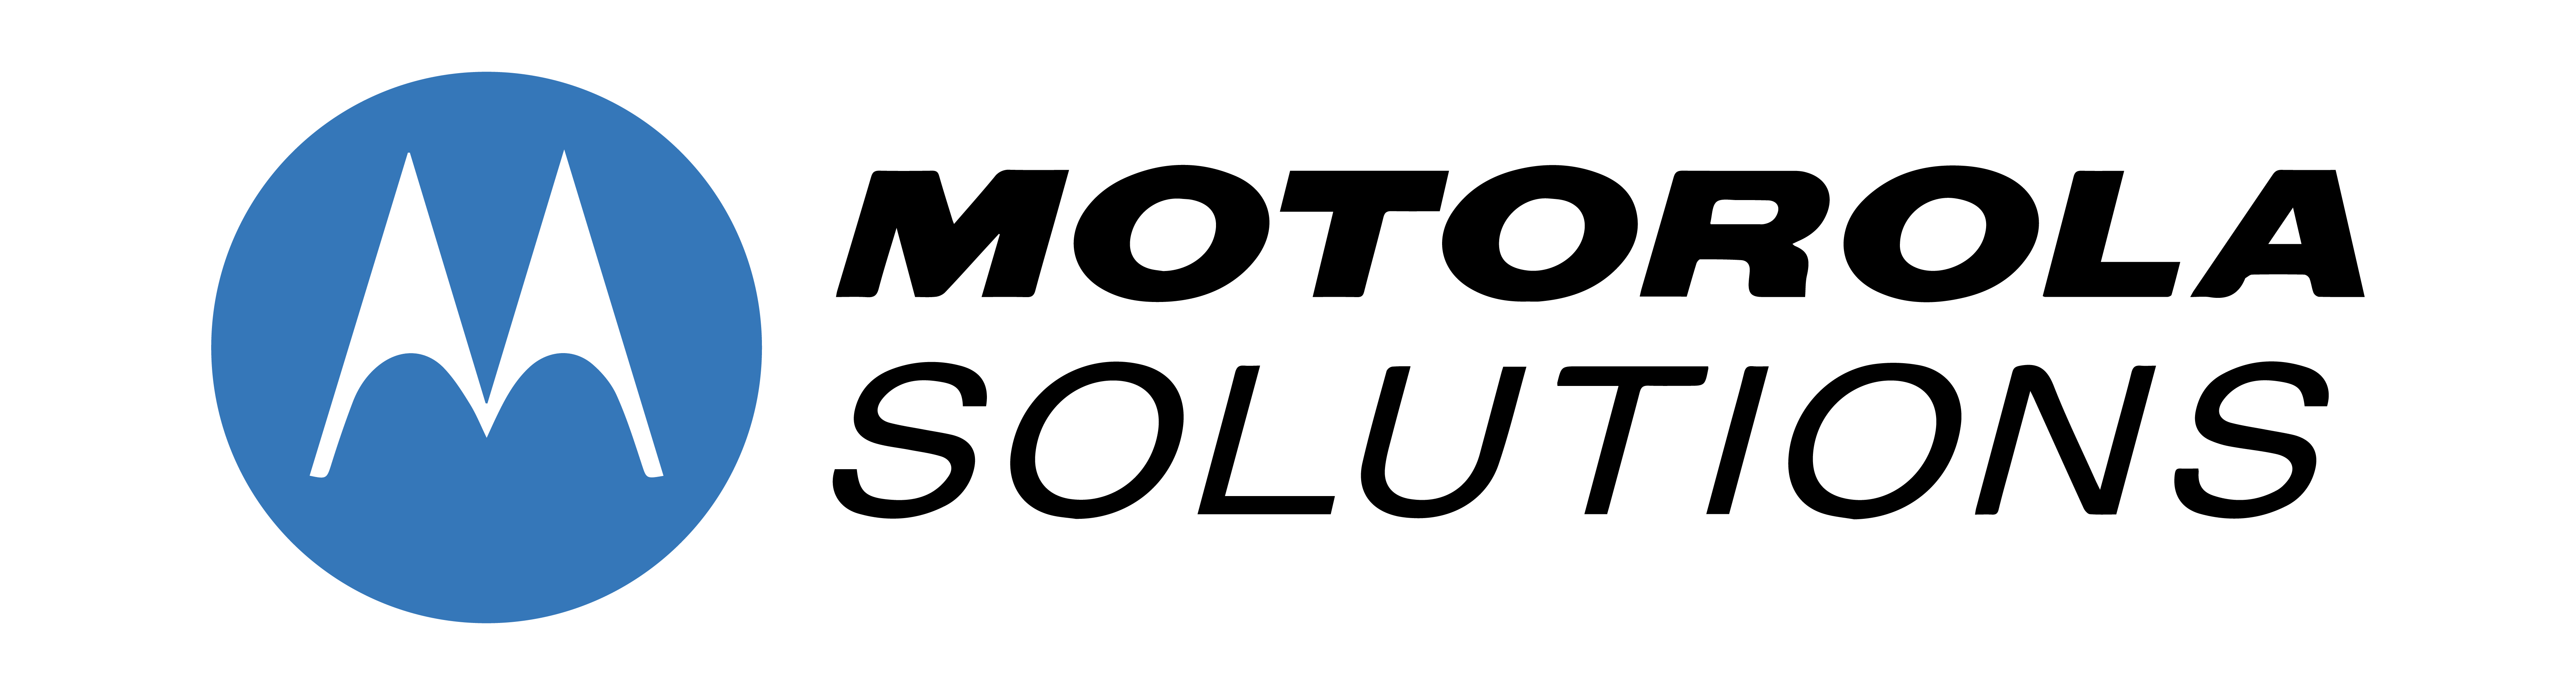 motorola_logo-1